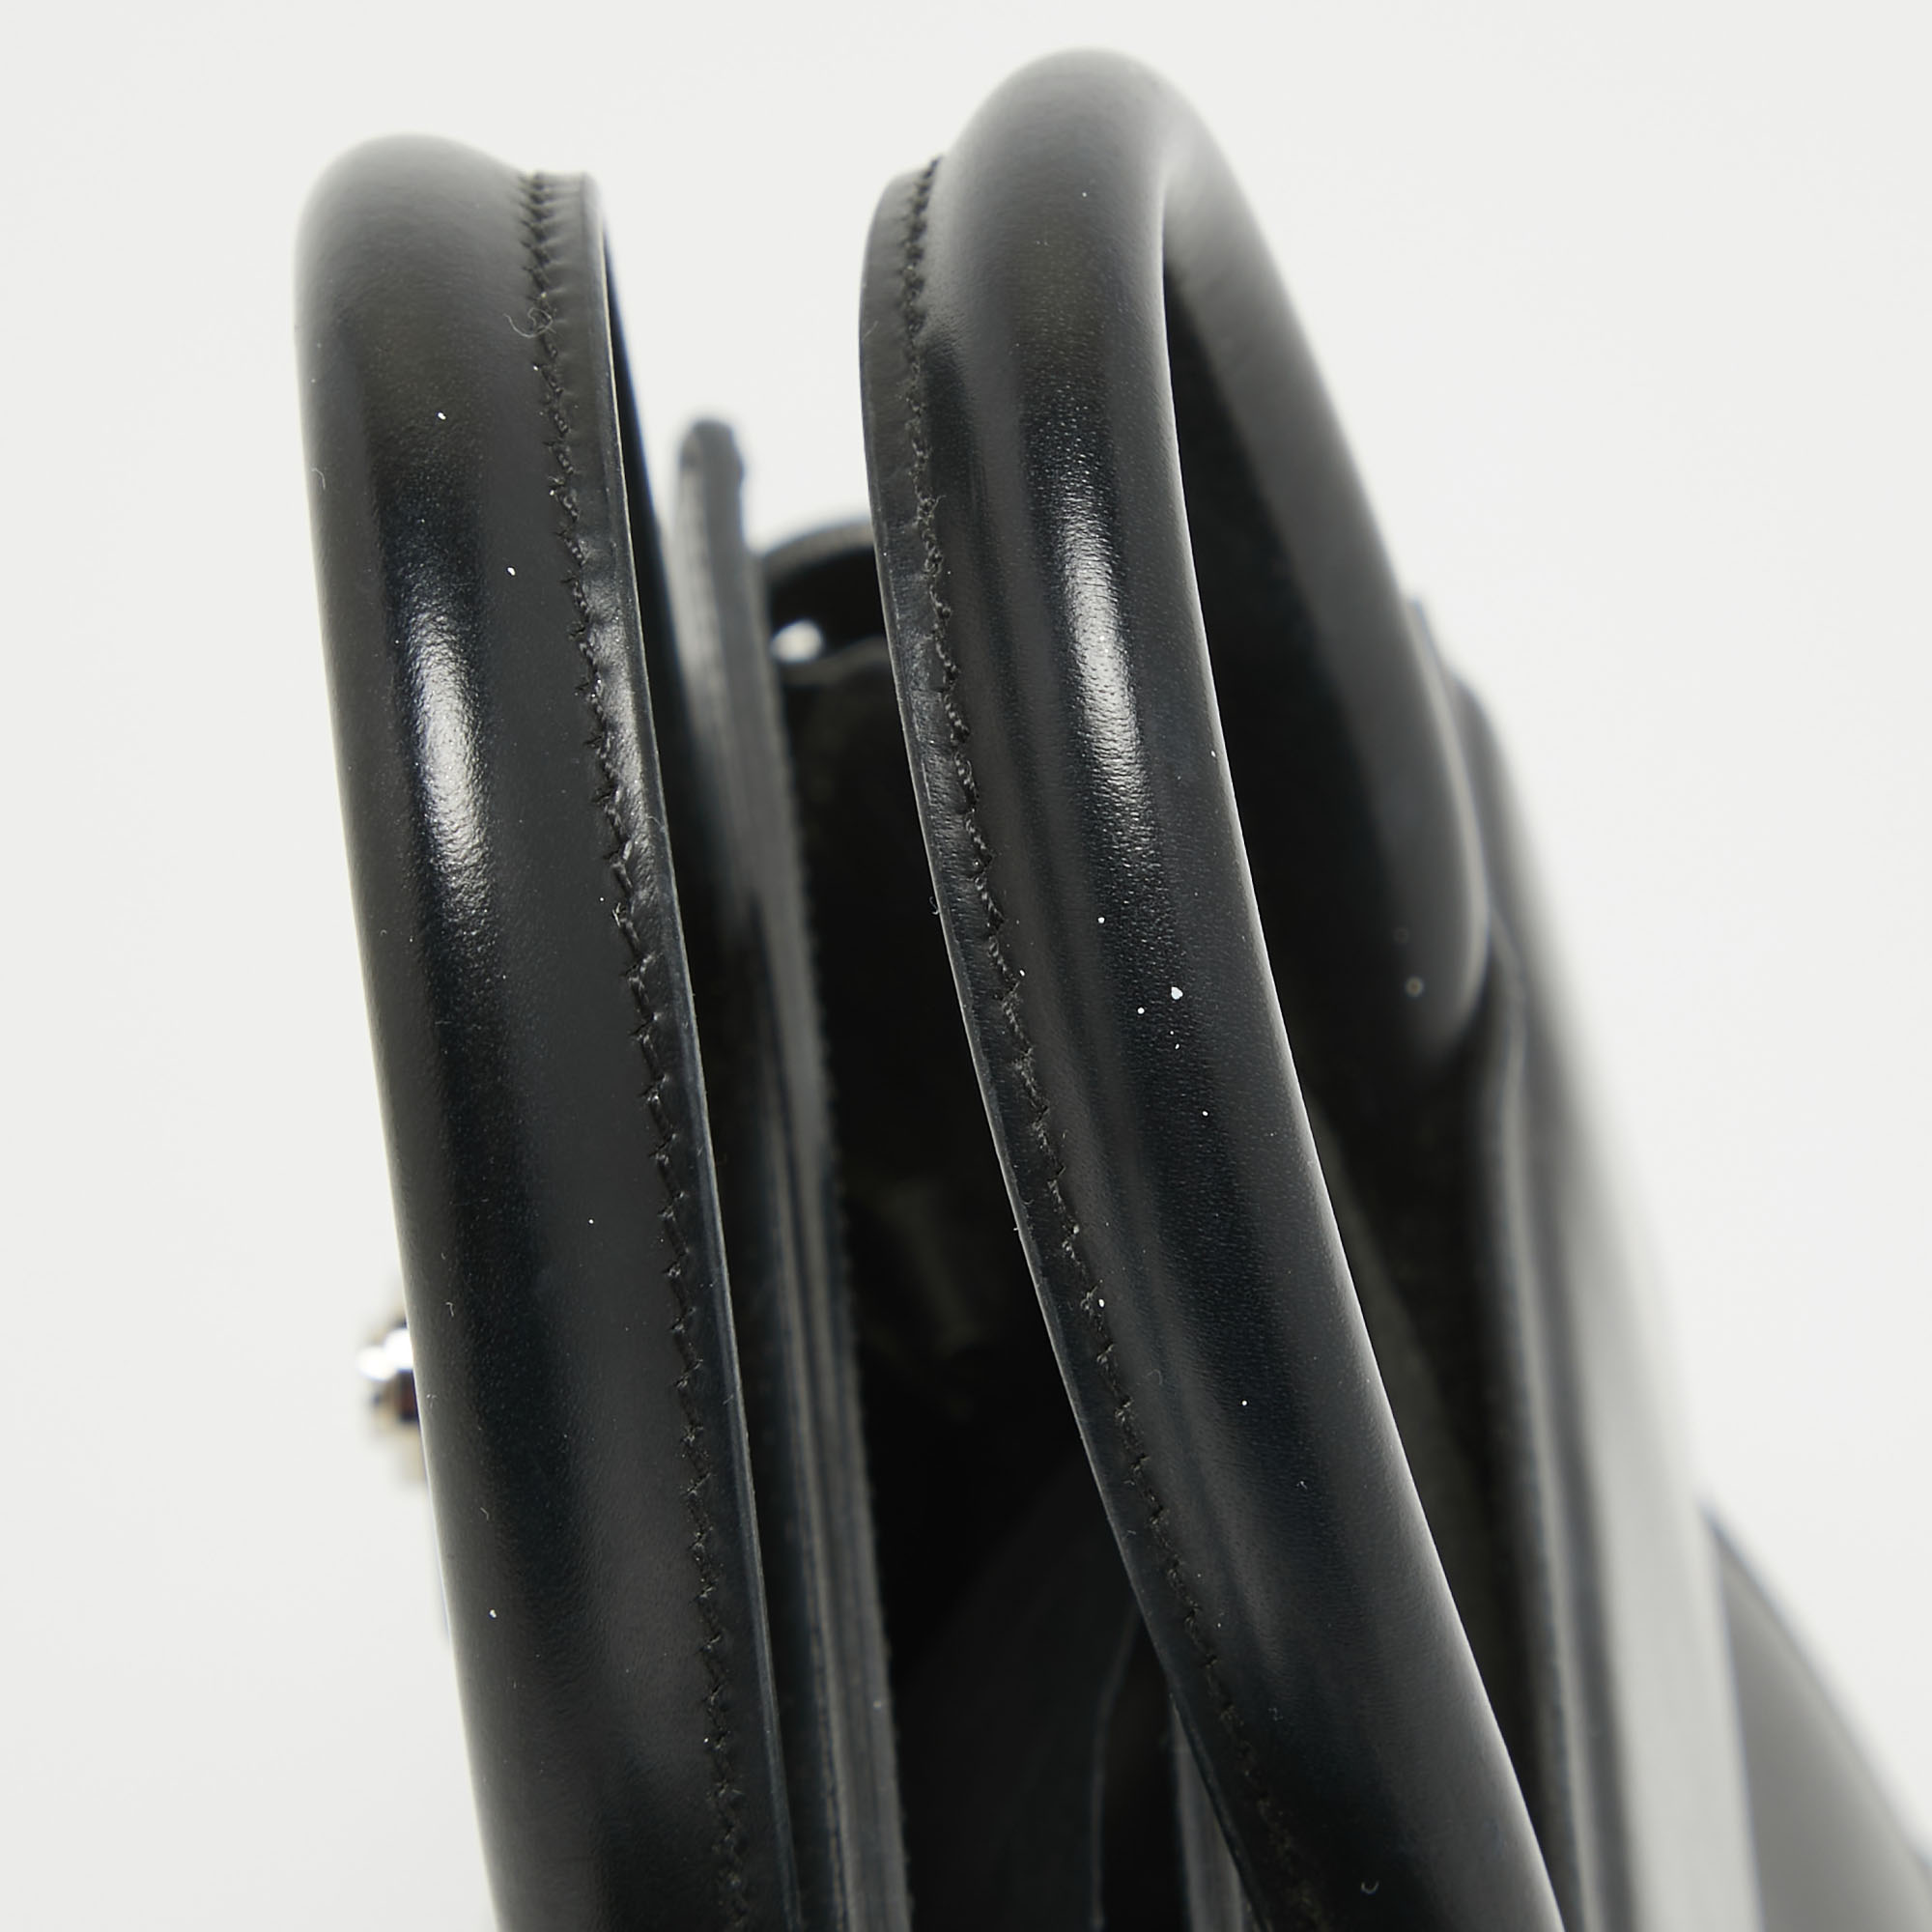 Givenchy Black Leather Nano Horizon Crossbody Bag